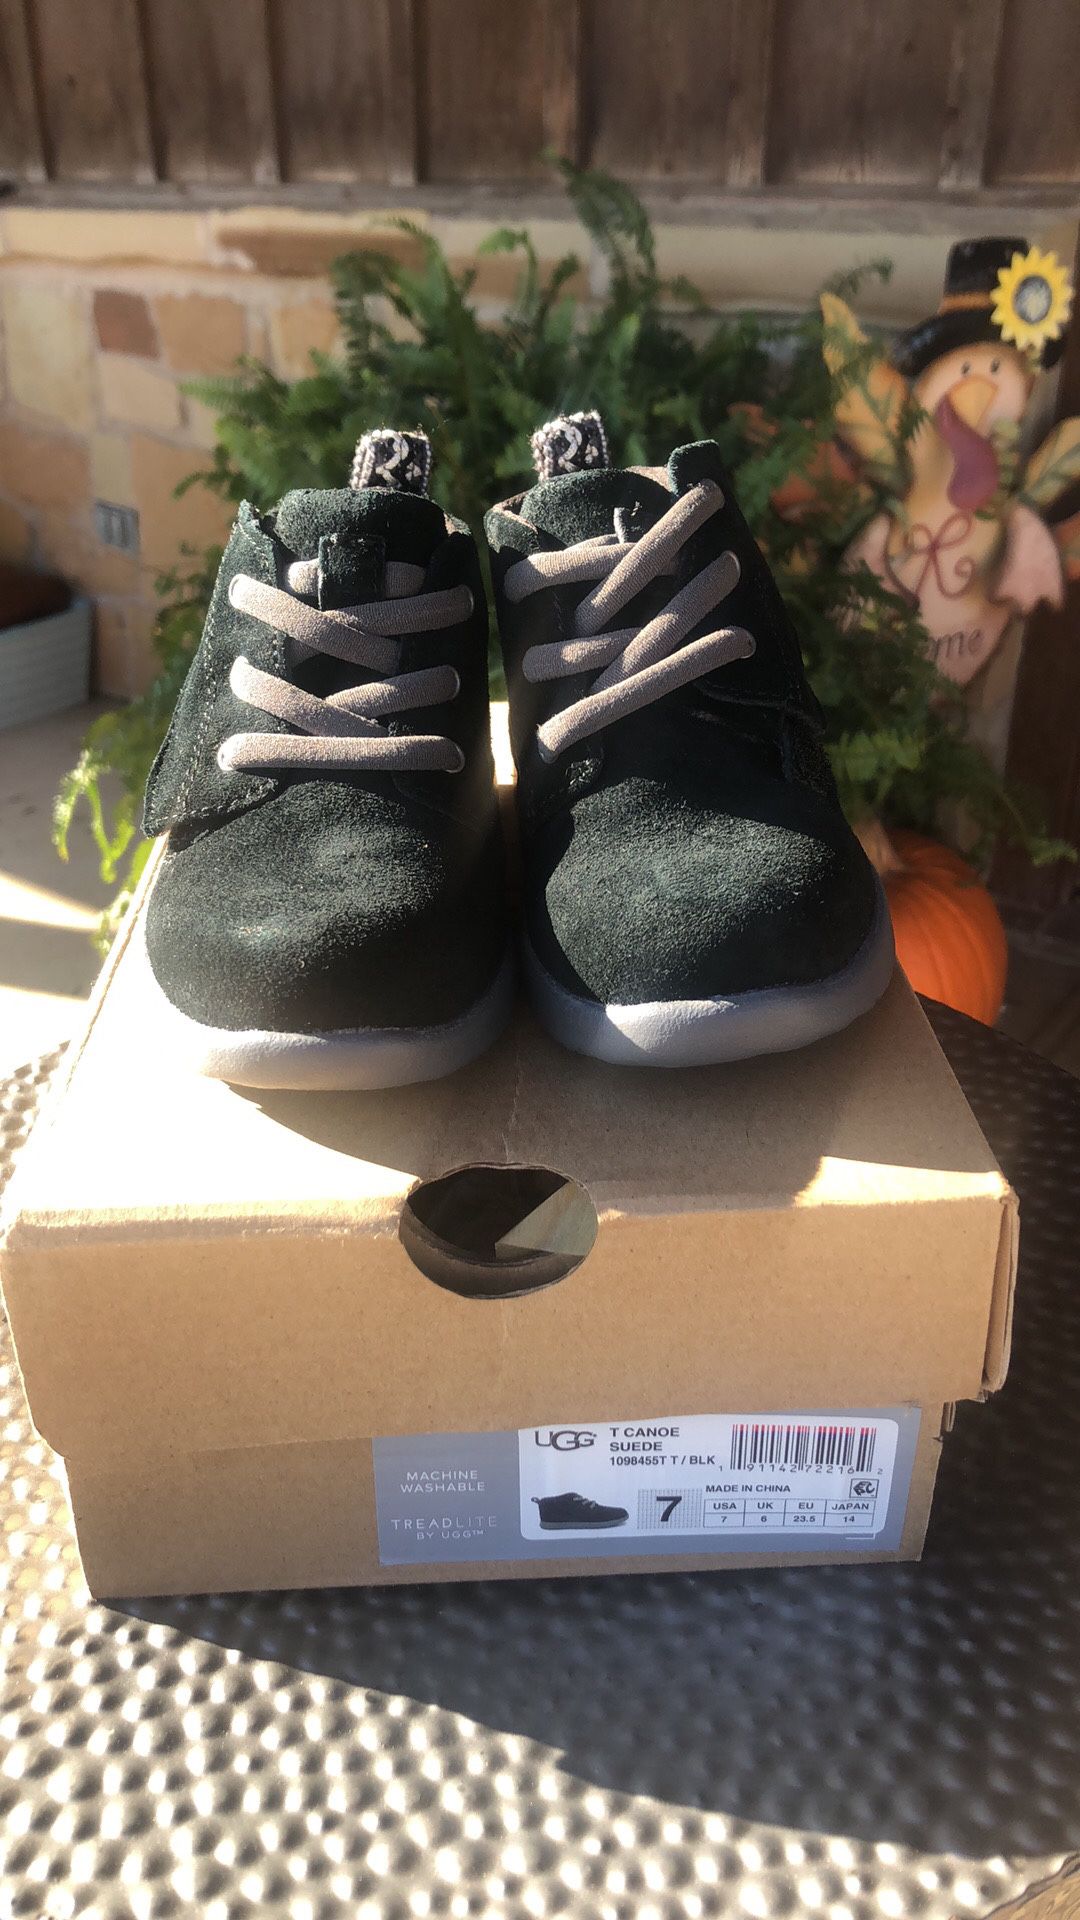 NIB Ugg Toddler Size 7 Black Suede Boots